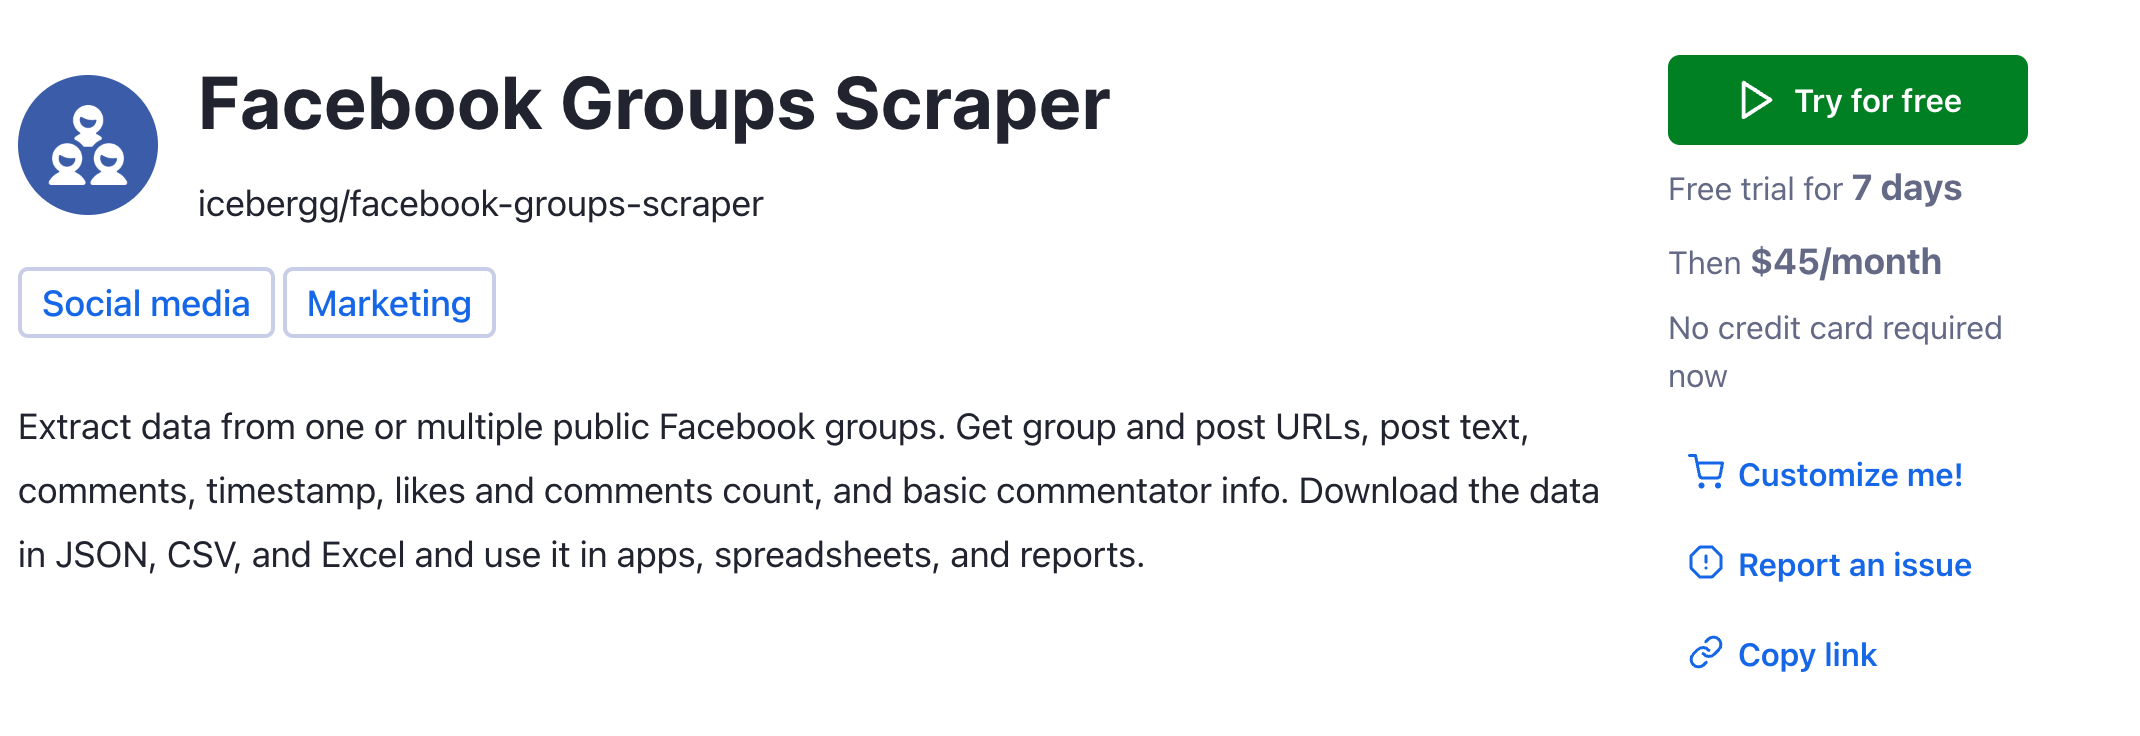 Step 1. Go to Facebook Groups Scraper - screenshot of Facebook Groups Scraper